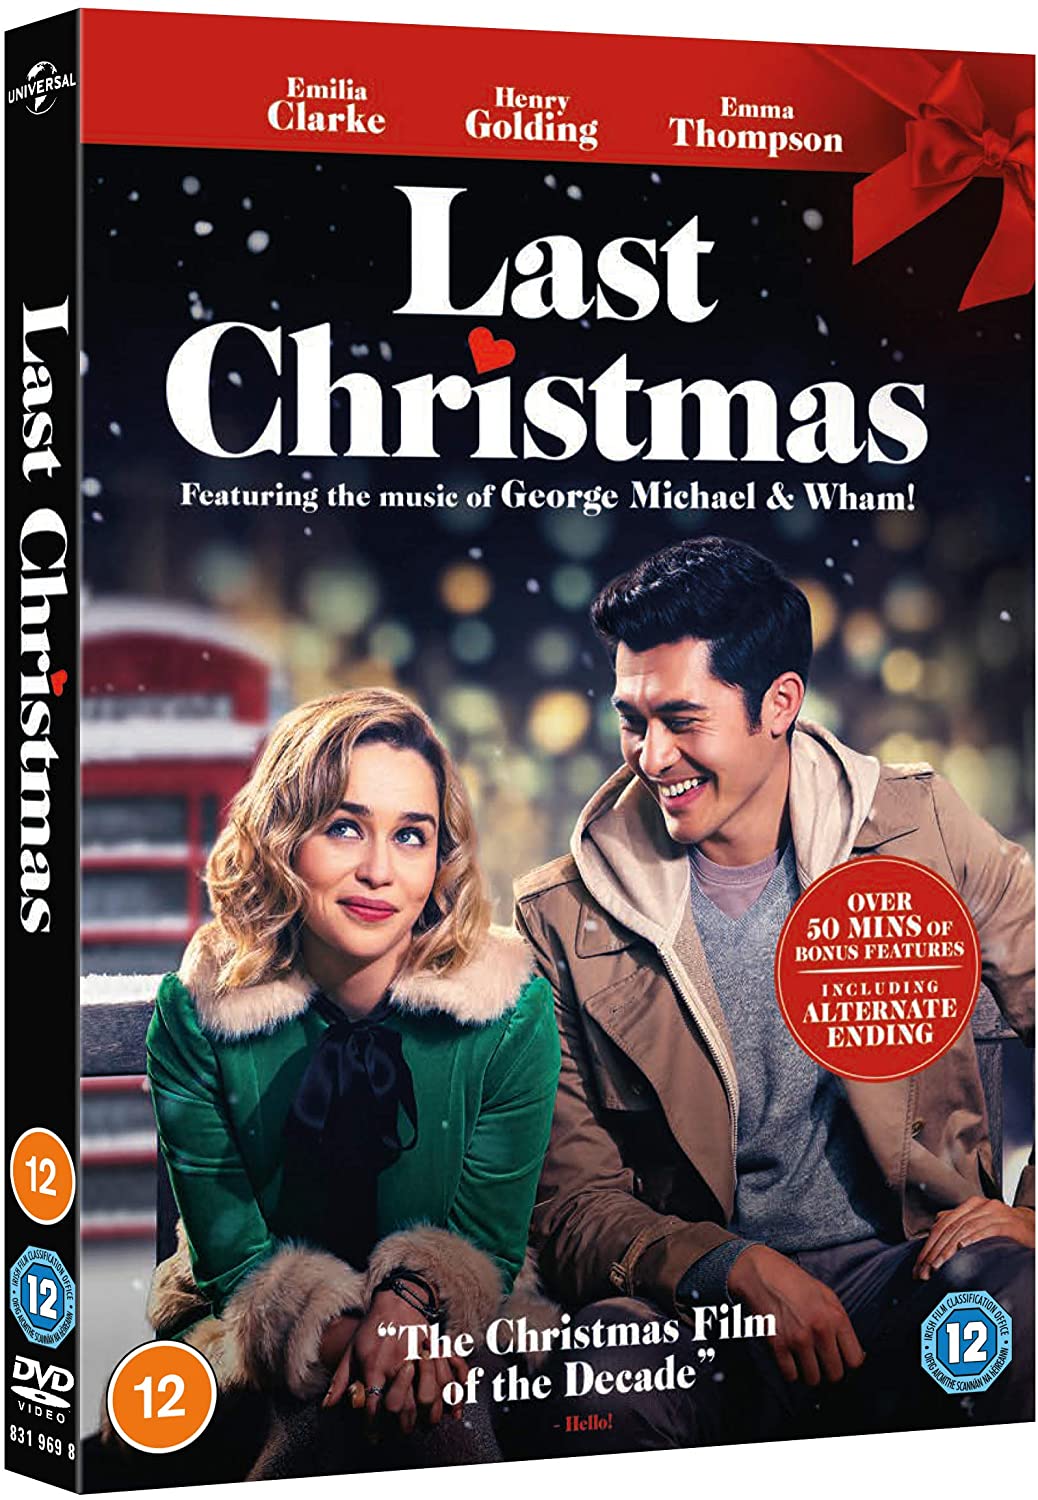 Last Christmas - Romance/Comedy [DVD]